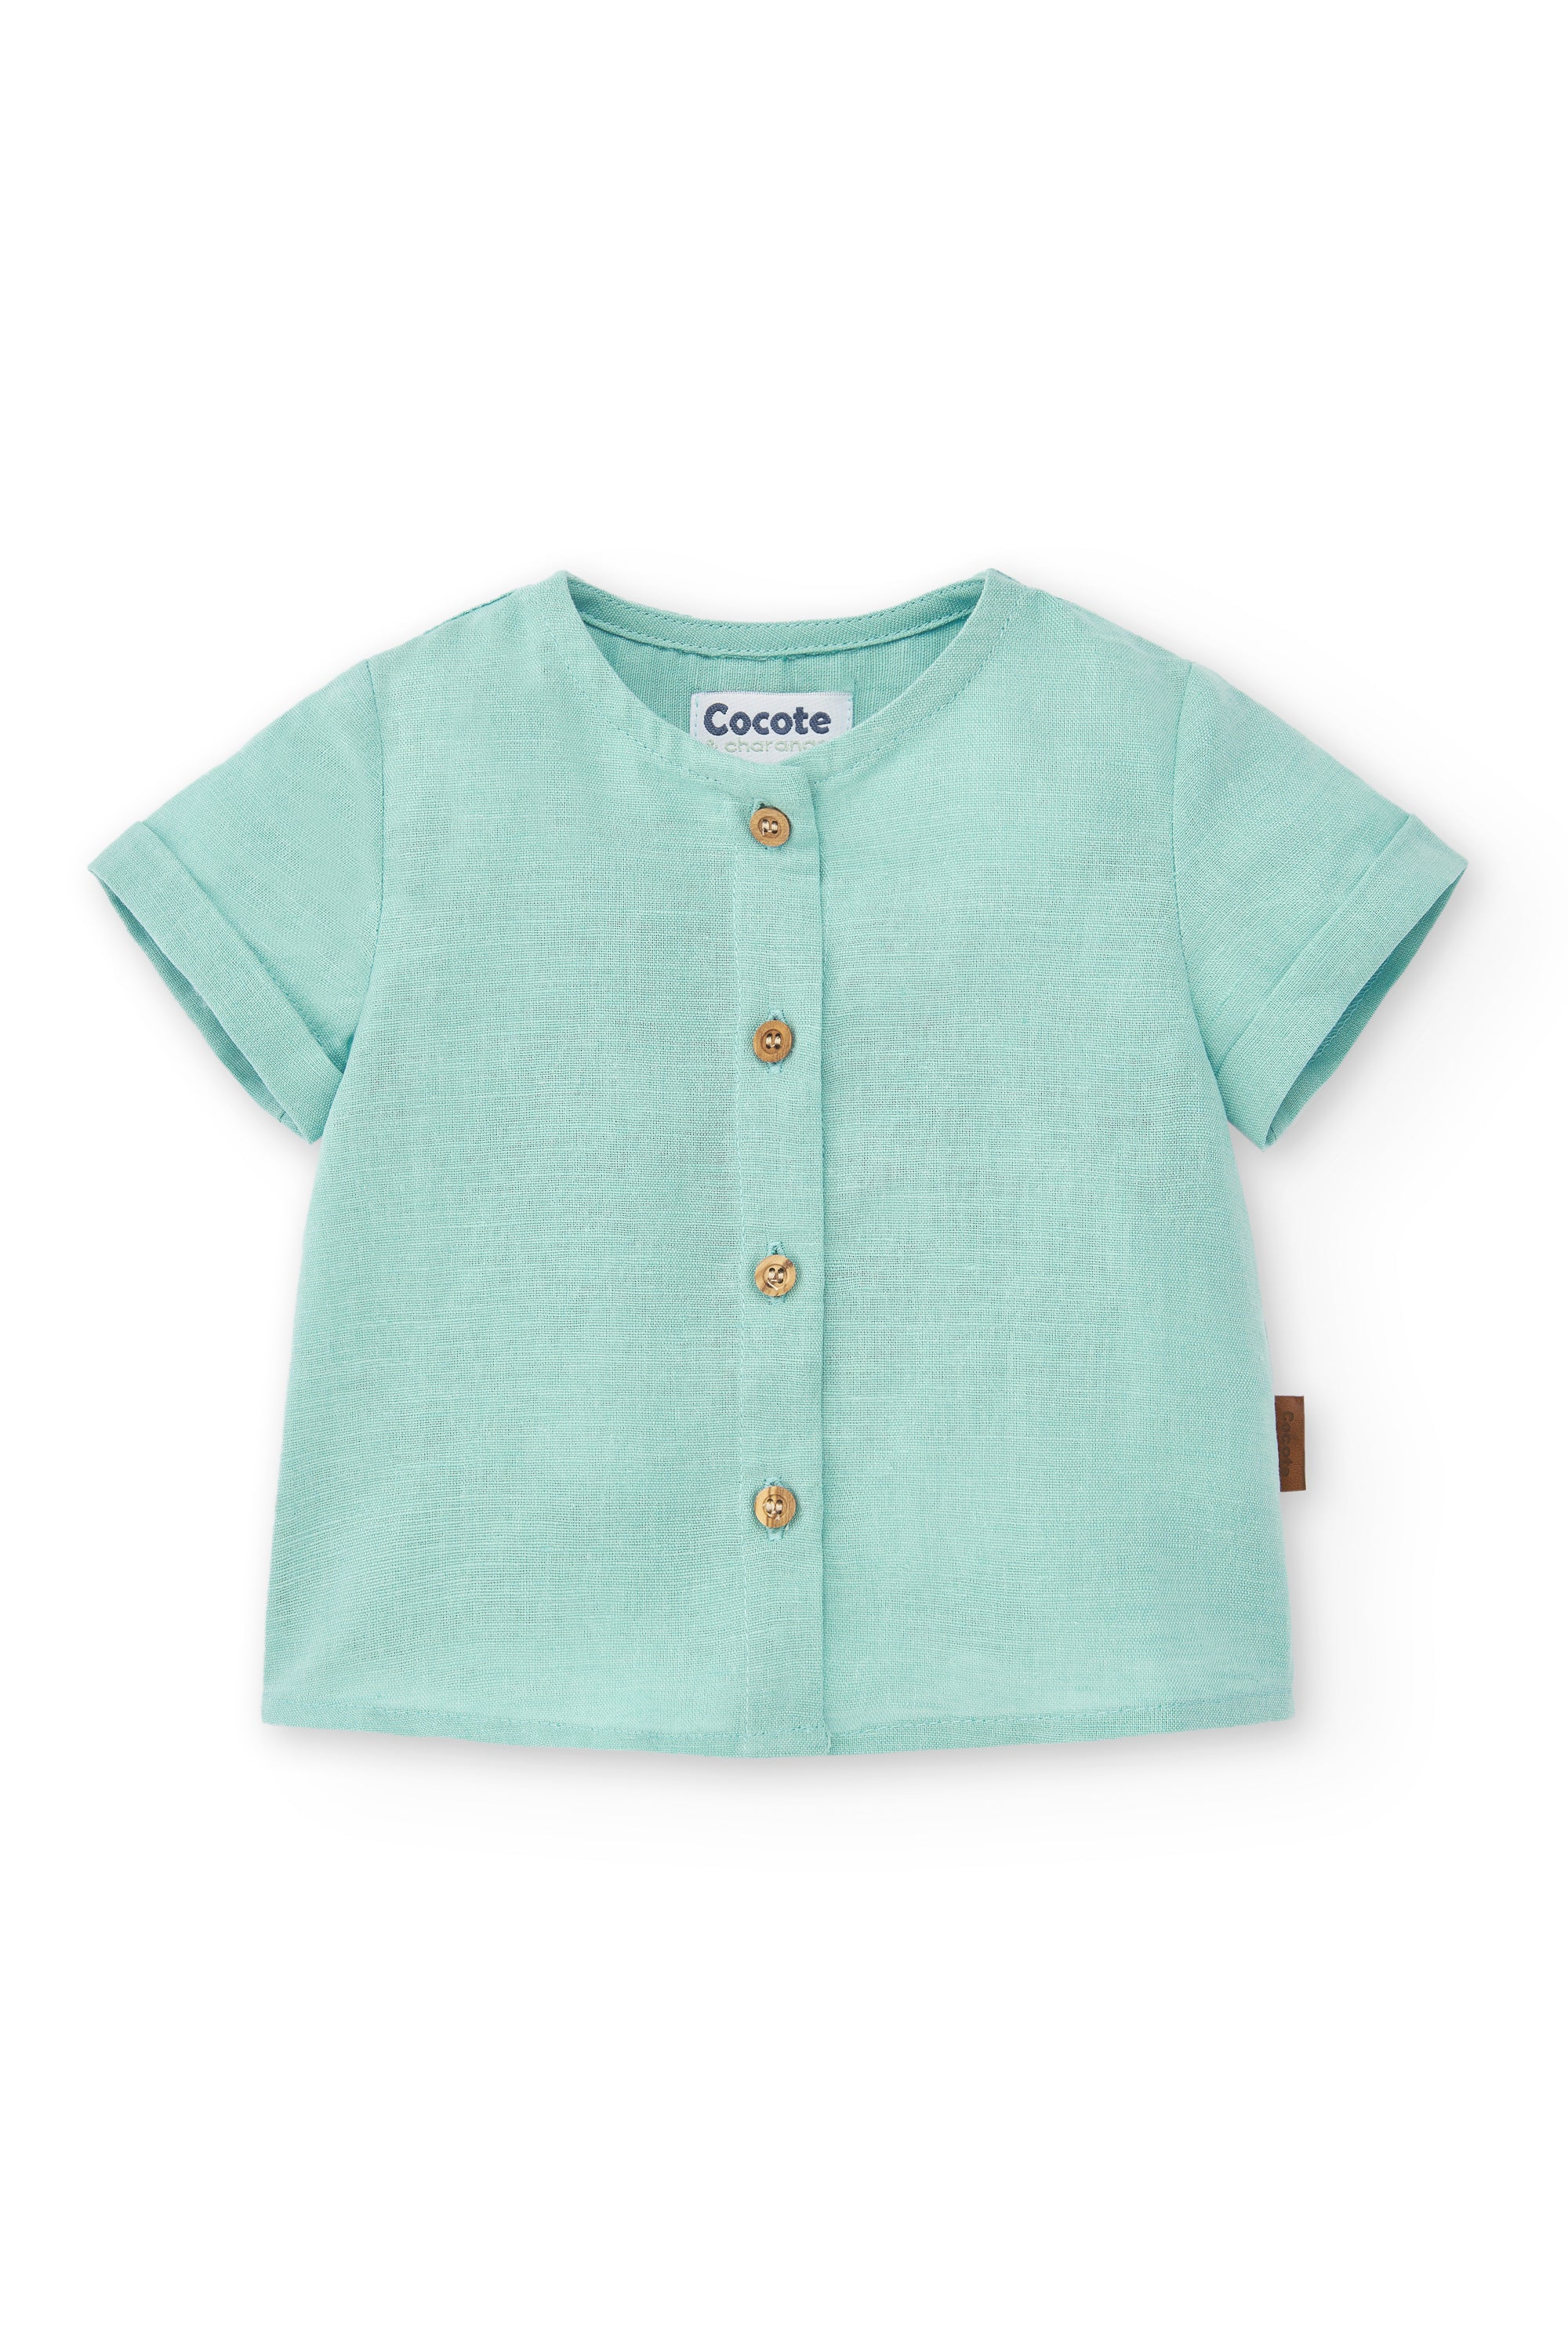 Camisa de bebé turquesa Cocote & Charanga VERANO/Outlet